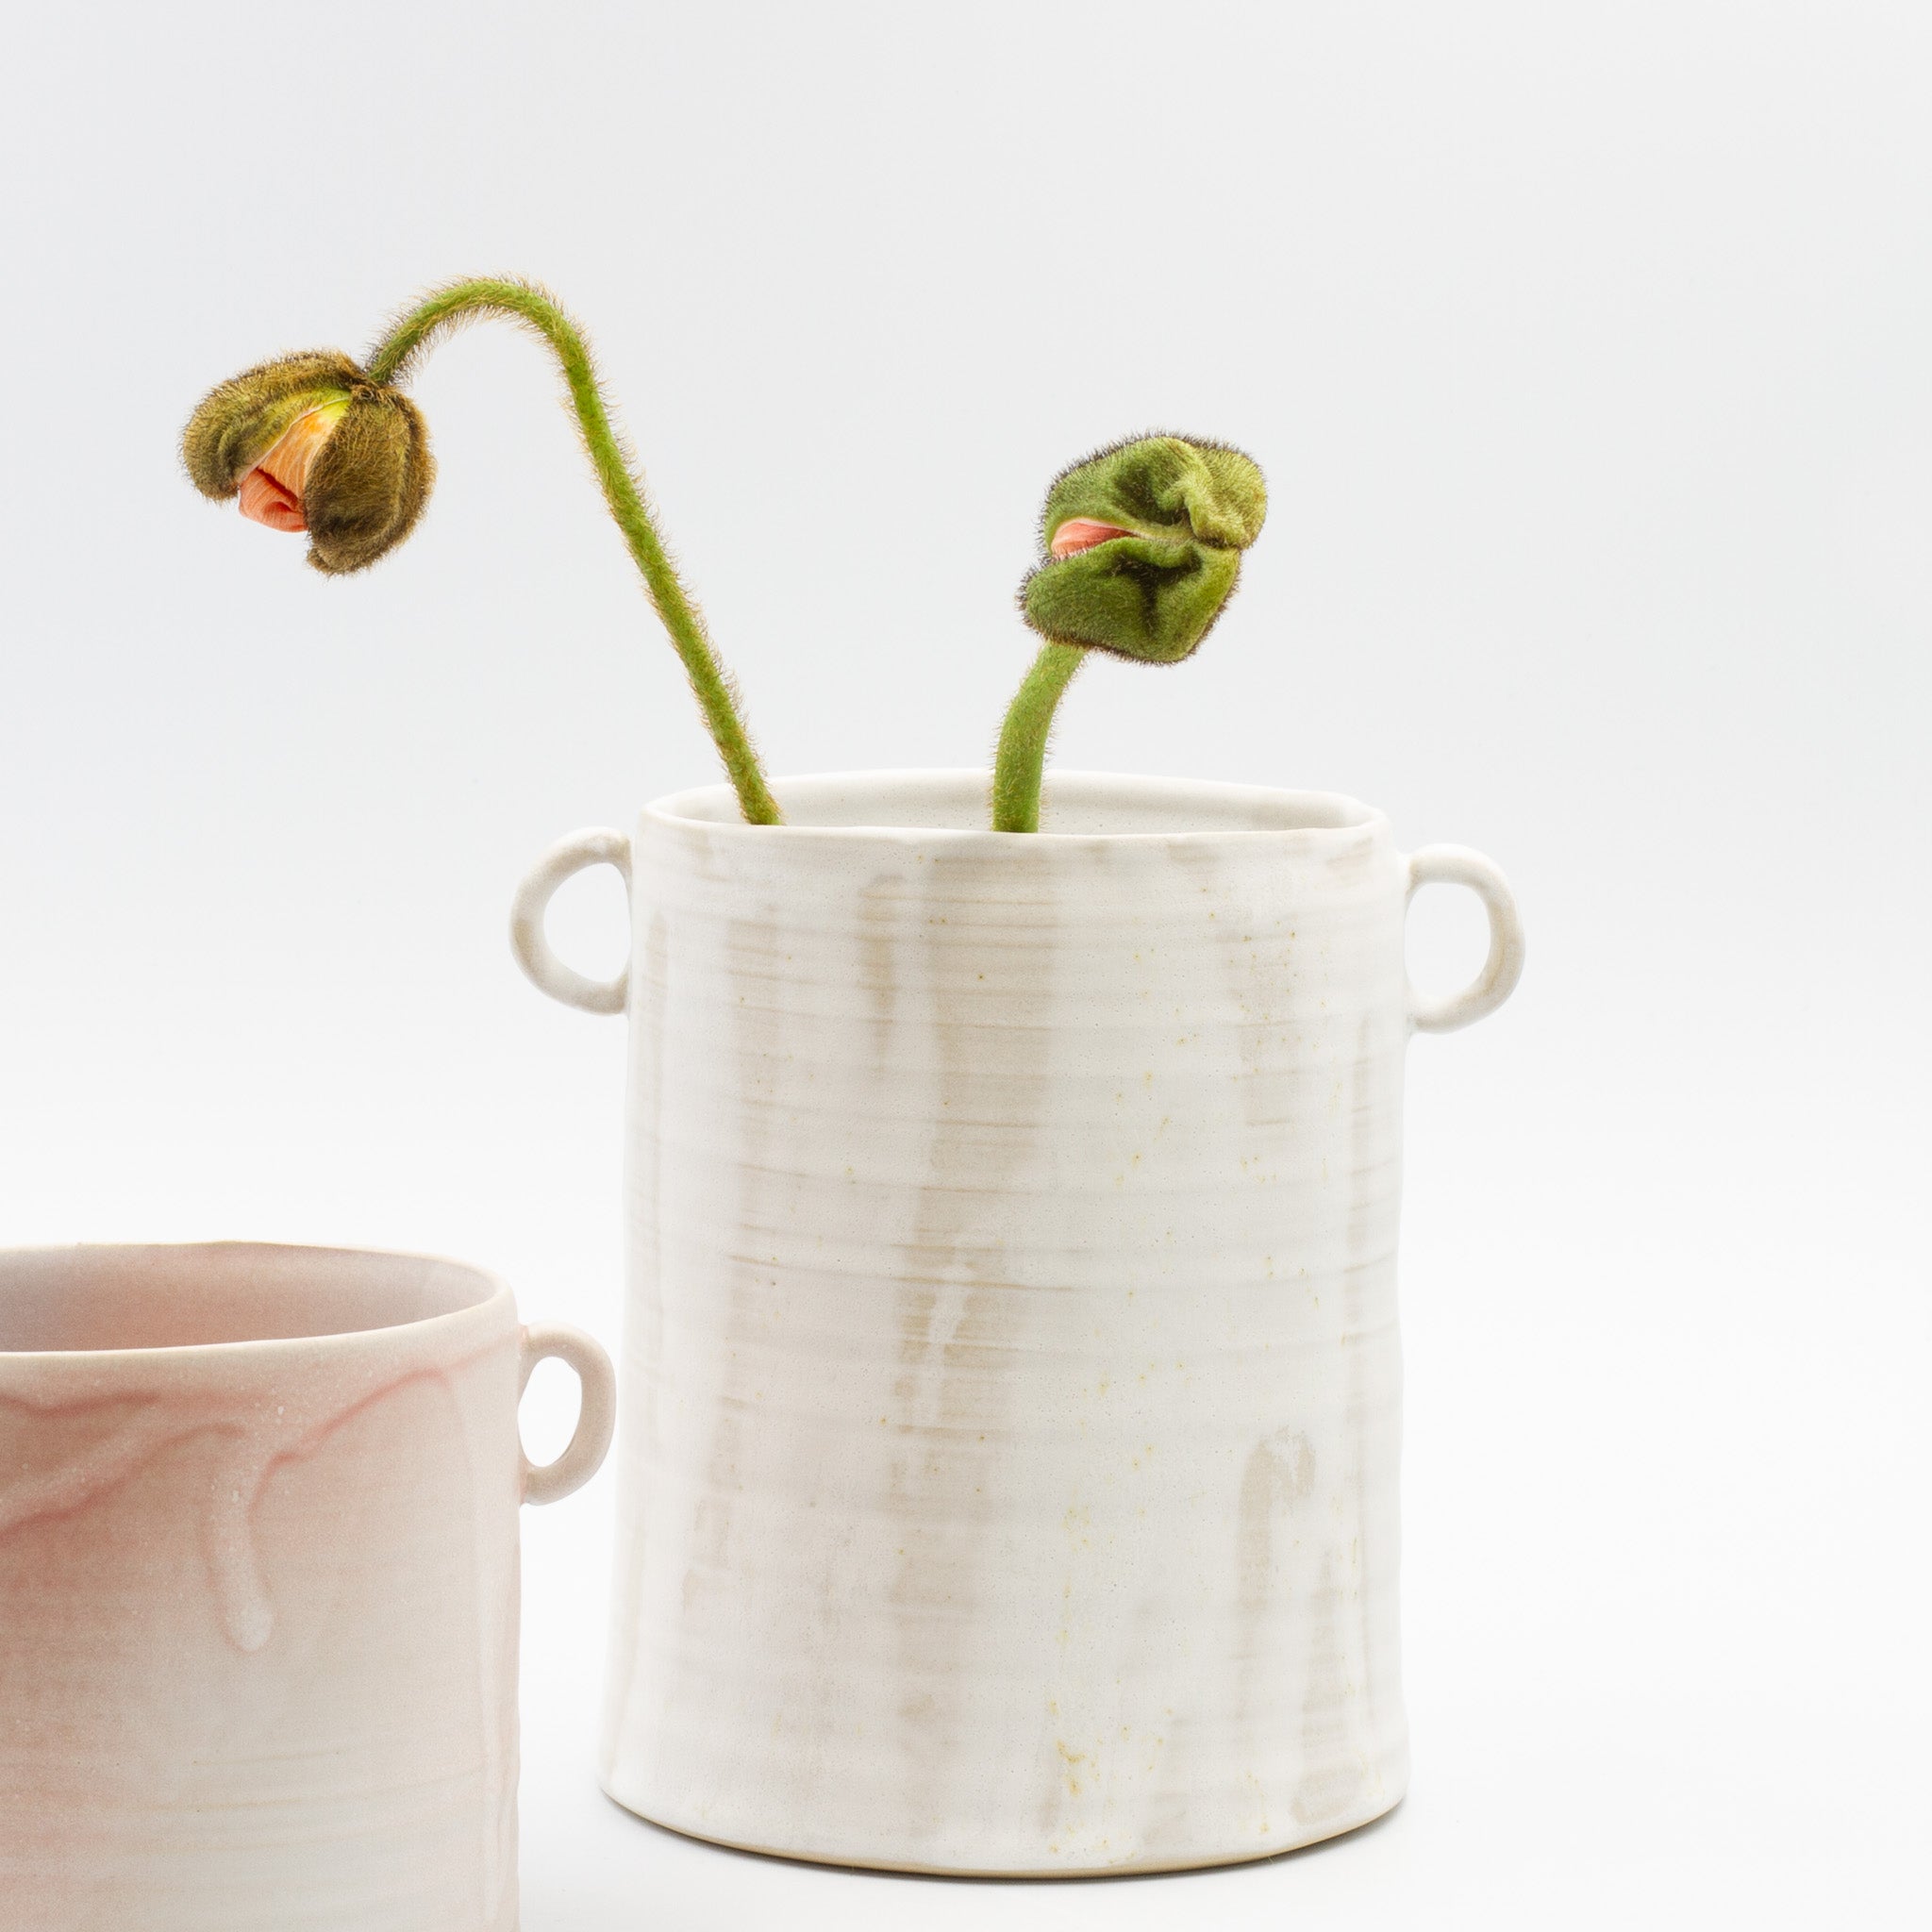 Vase with handles -white